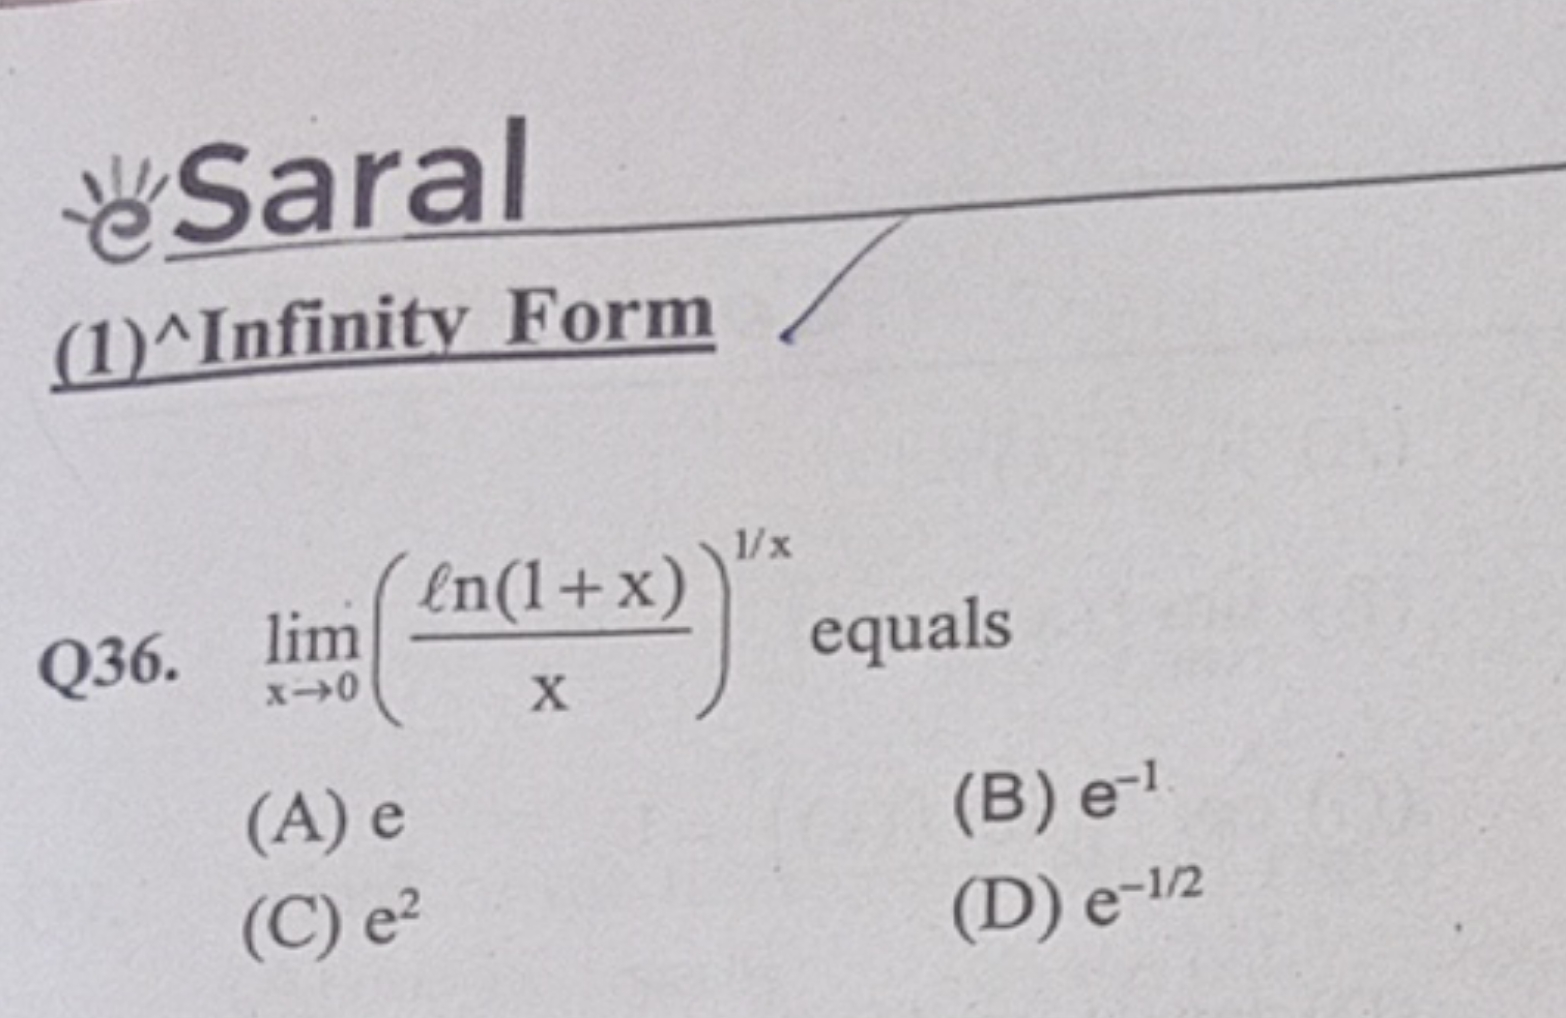 - 'esaral (1)^Infinity Form Q36. limx→0​(xℓln(1+x)​)1/x equals